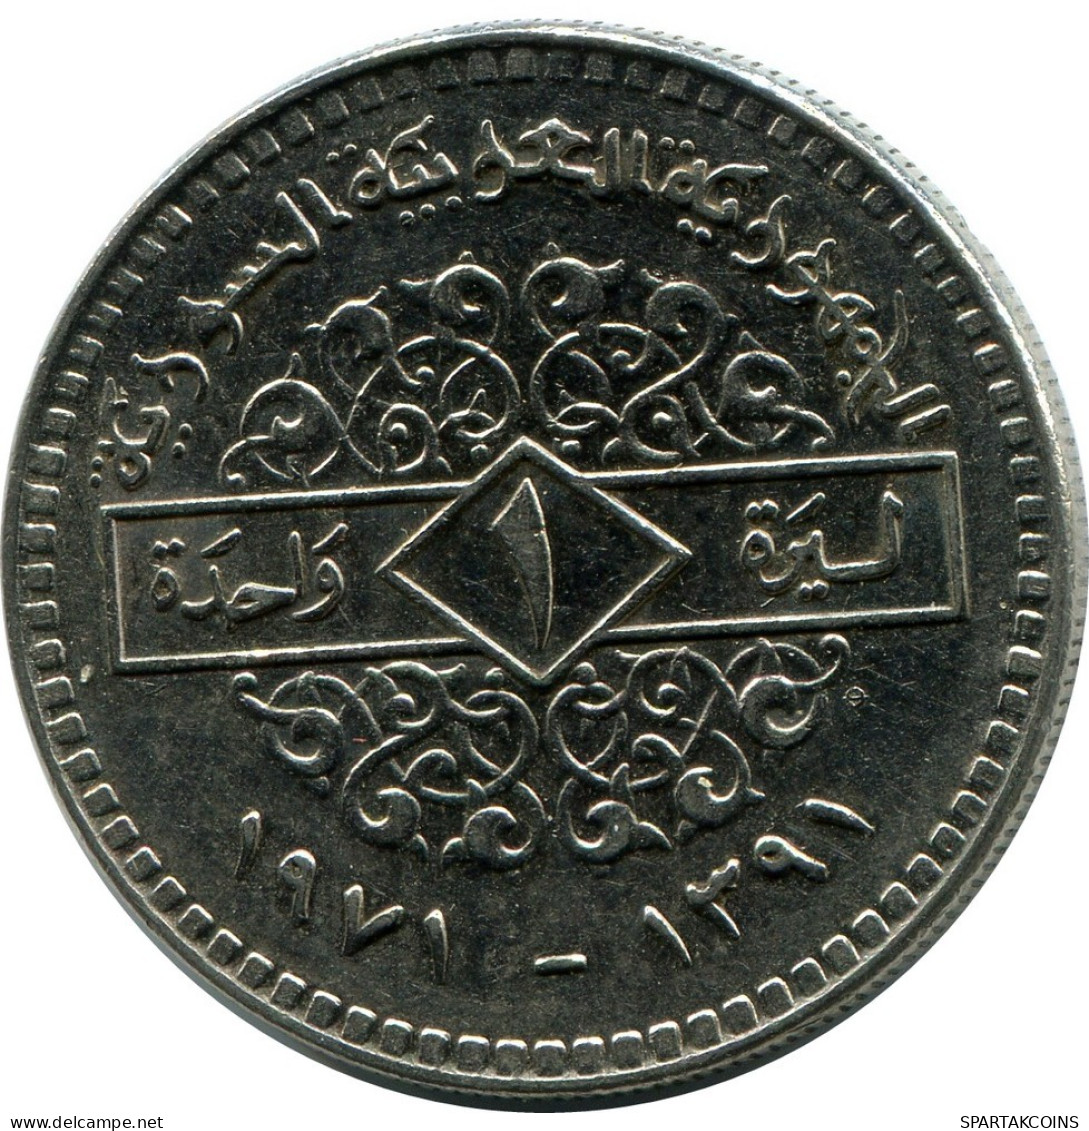 1 LIRA 1971 SYRIA Islamic Coin #AP549.U.A - Syria